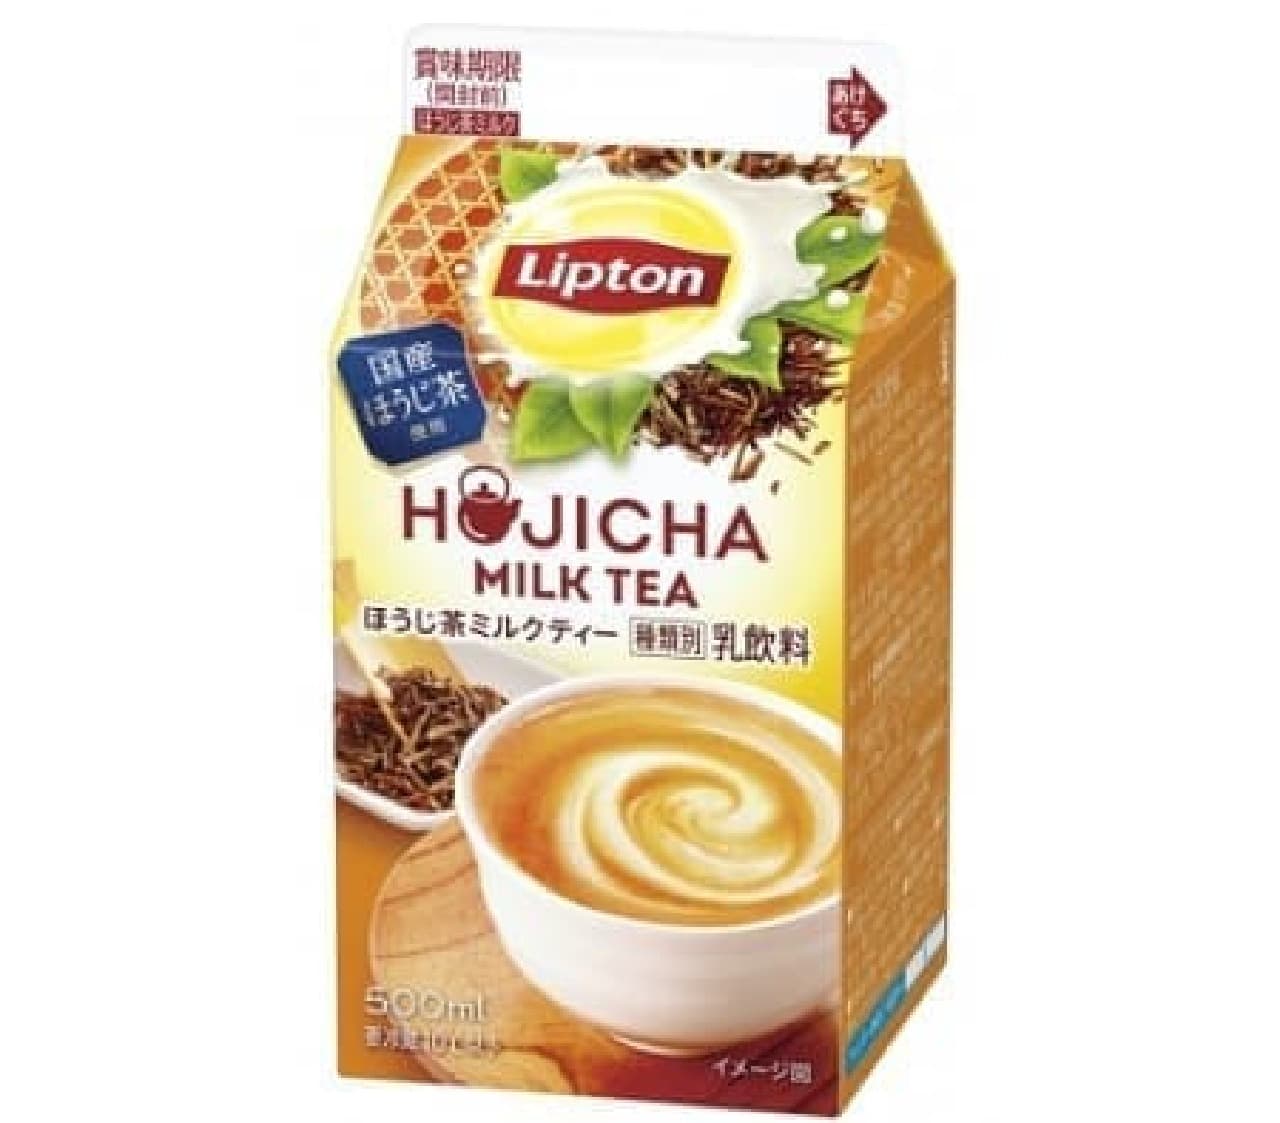 Lipton roasted tea milk tea